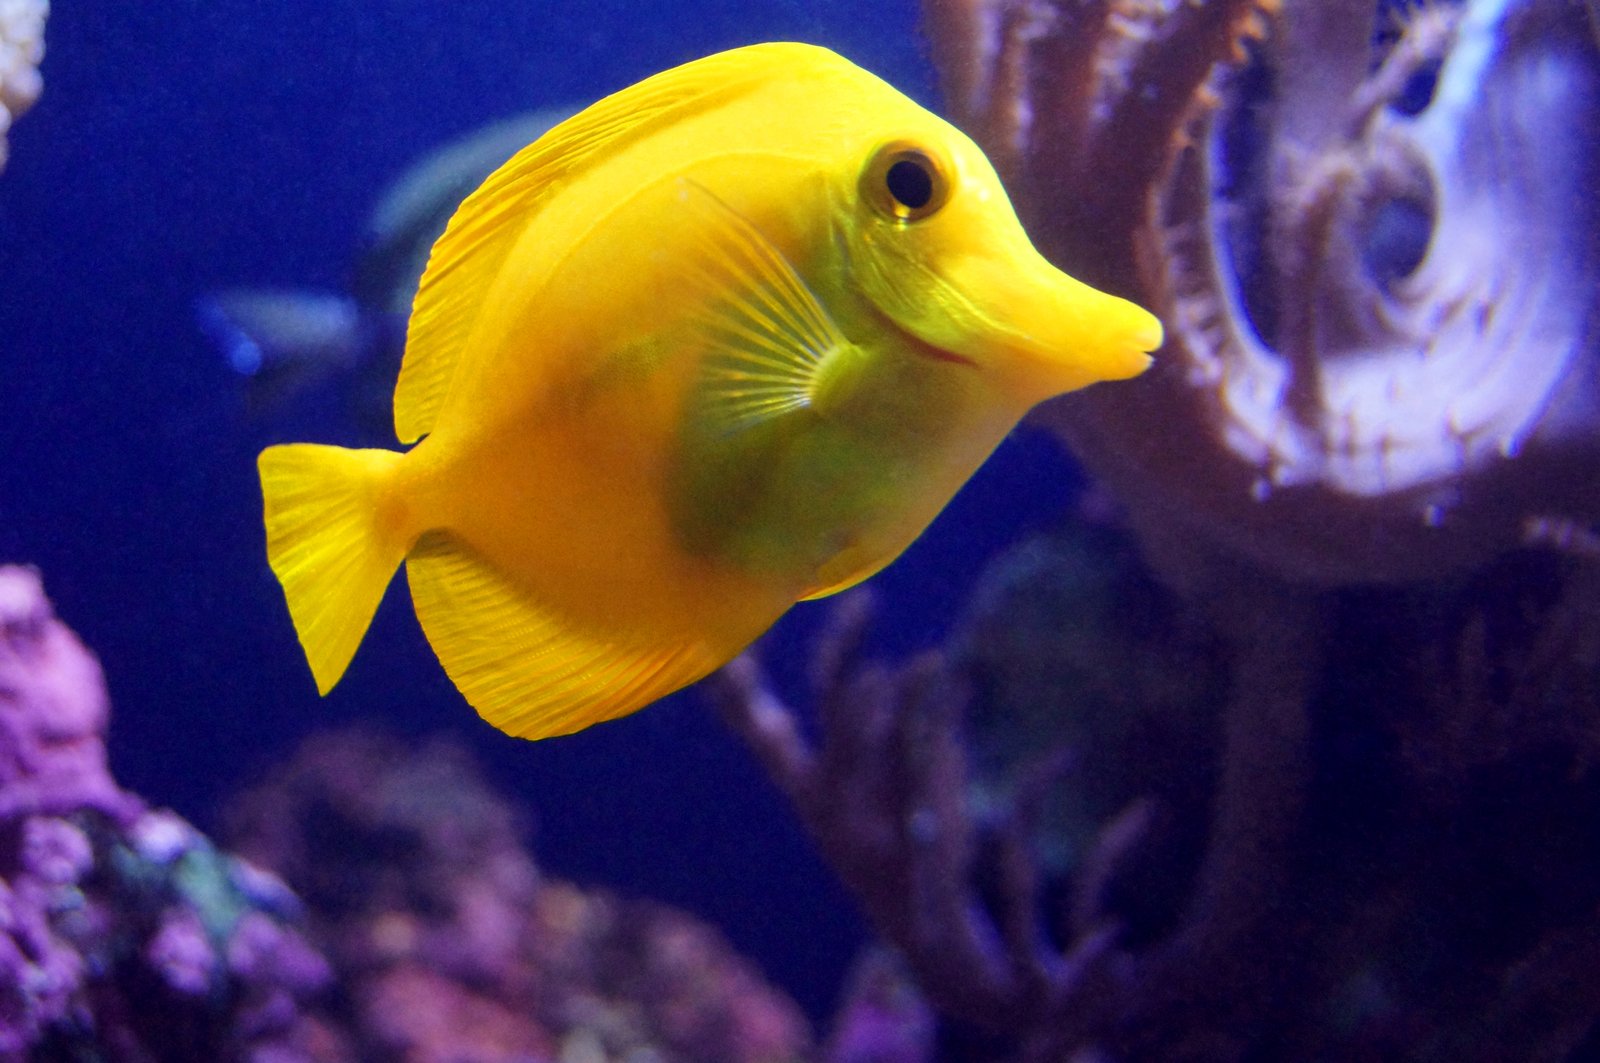 yellow fish swimming on a blue ocean or ocean floor